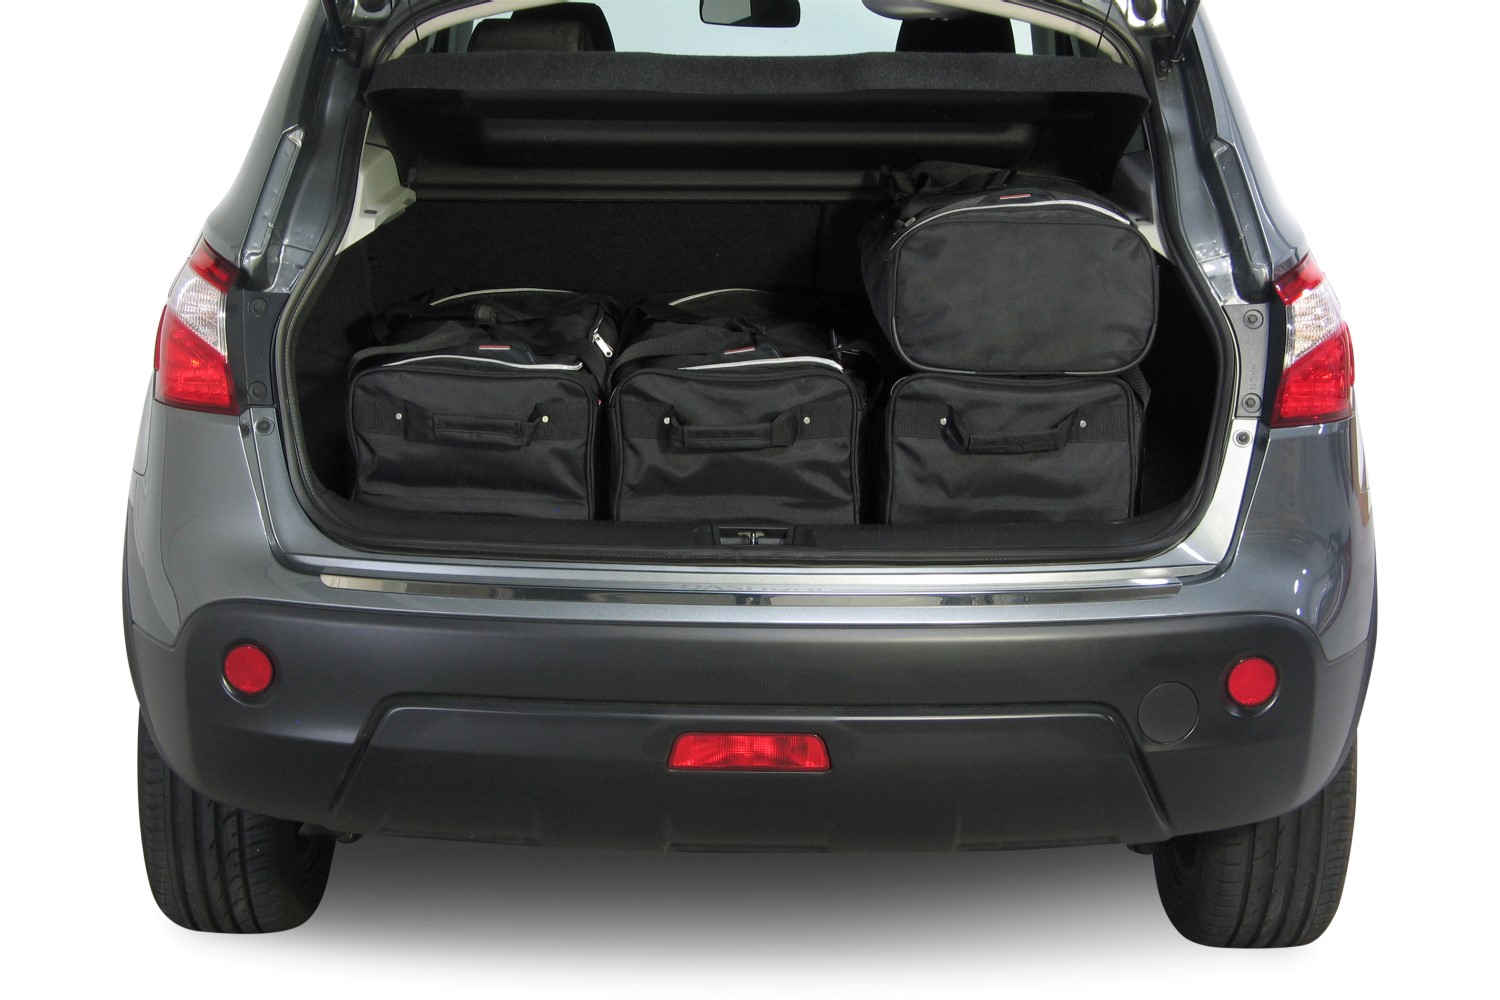 https://www.car-bags.com/images/stories/virtuemart/product/n10101s-nissan-qashqai-07-14-car-bags-3.jpg